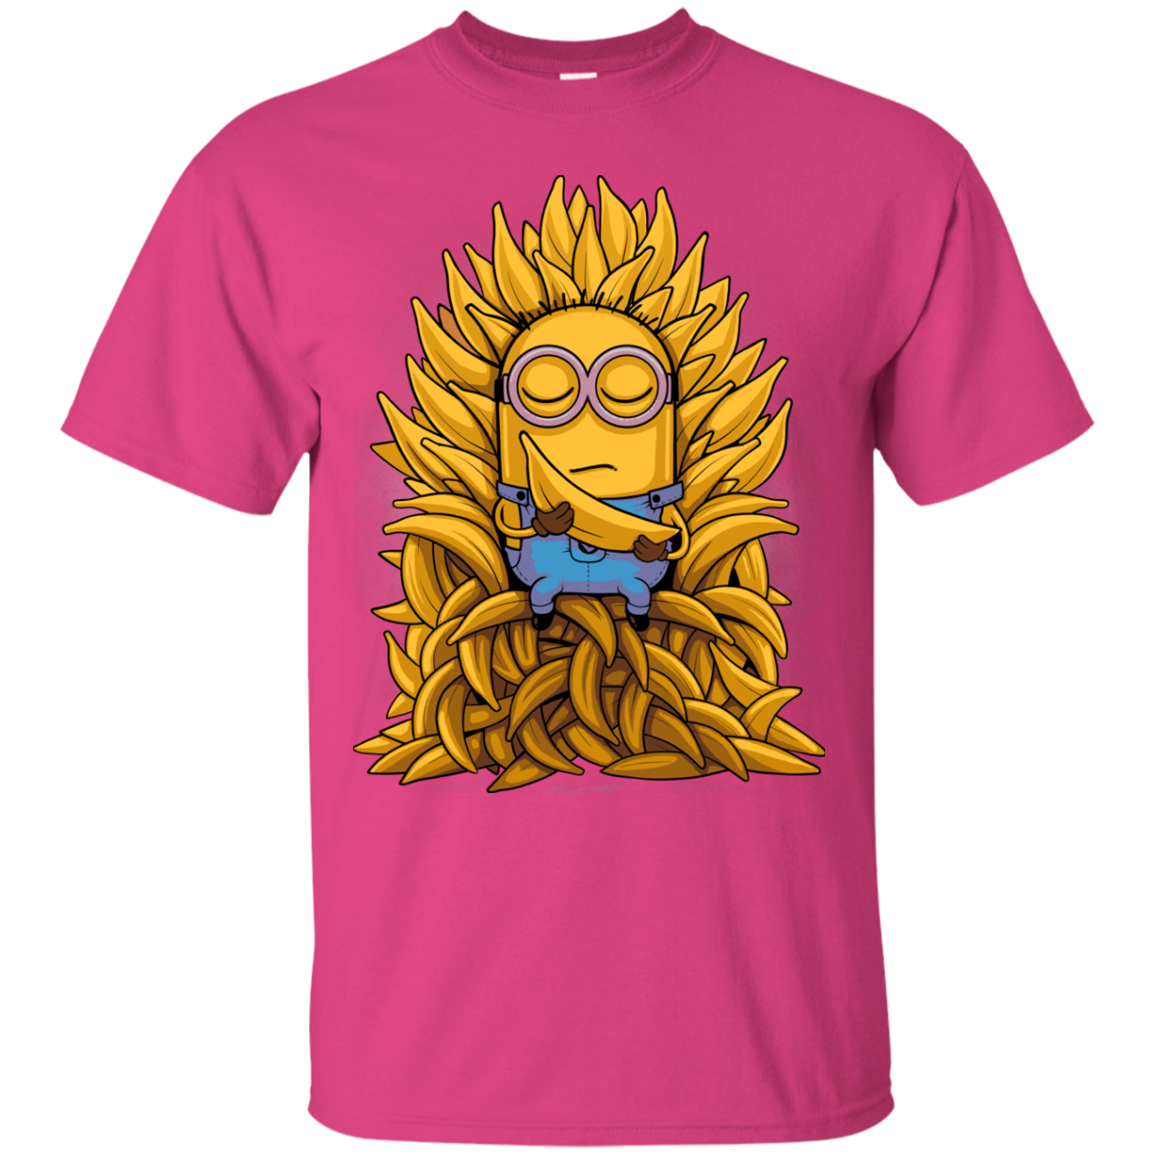 Banana Throne T-Shirt